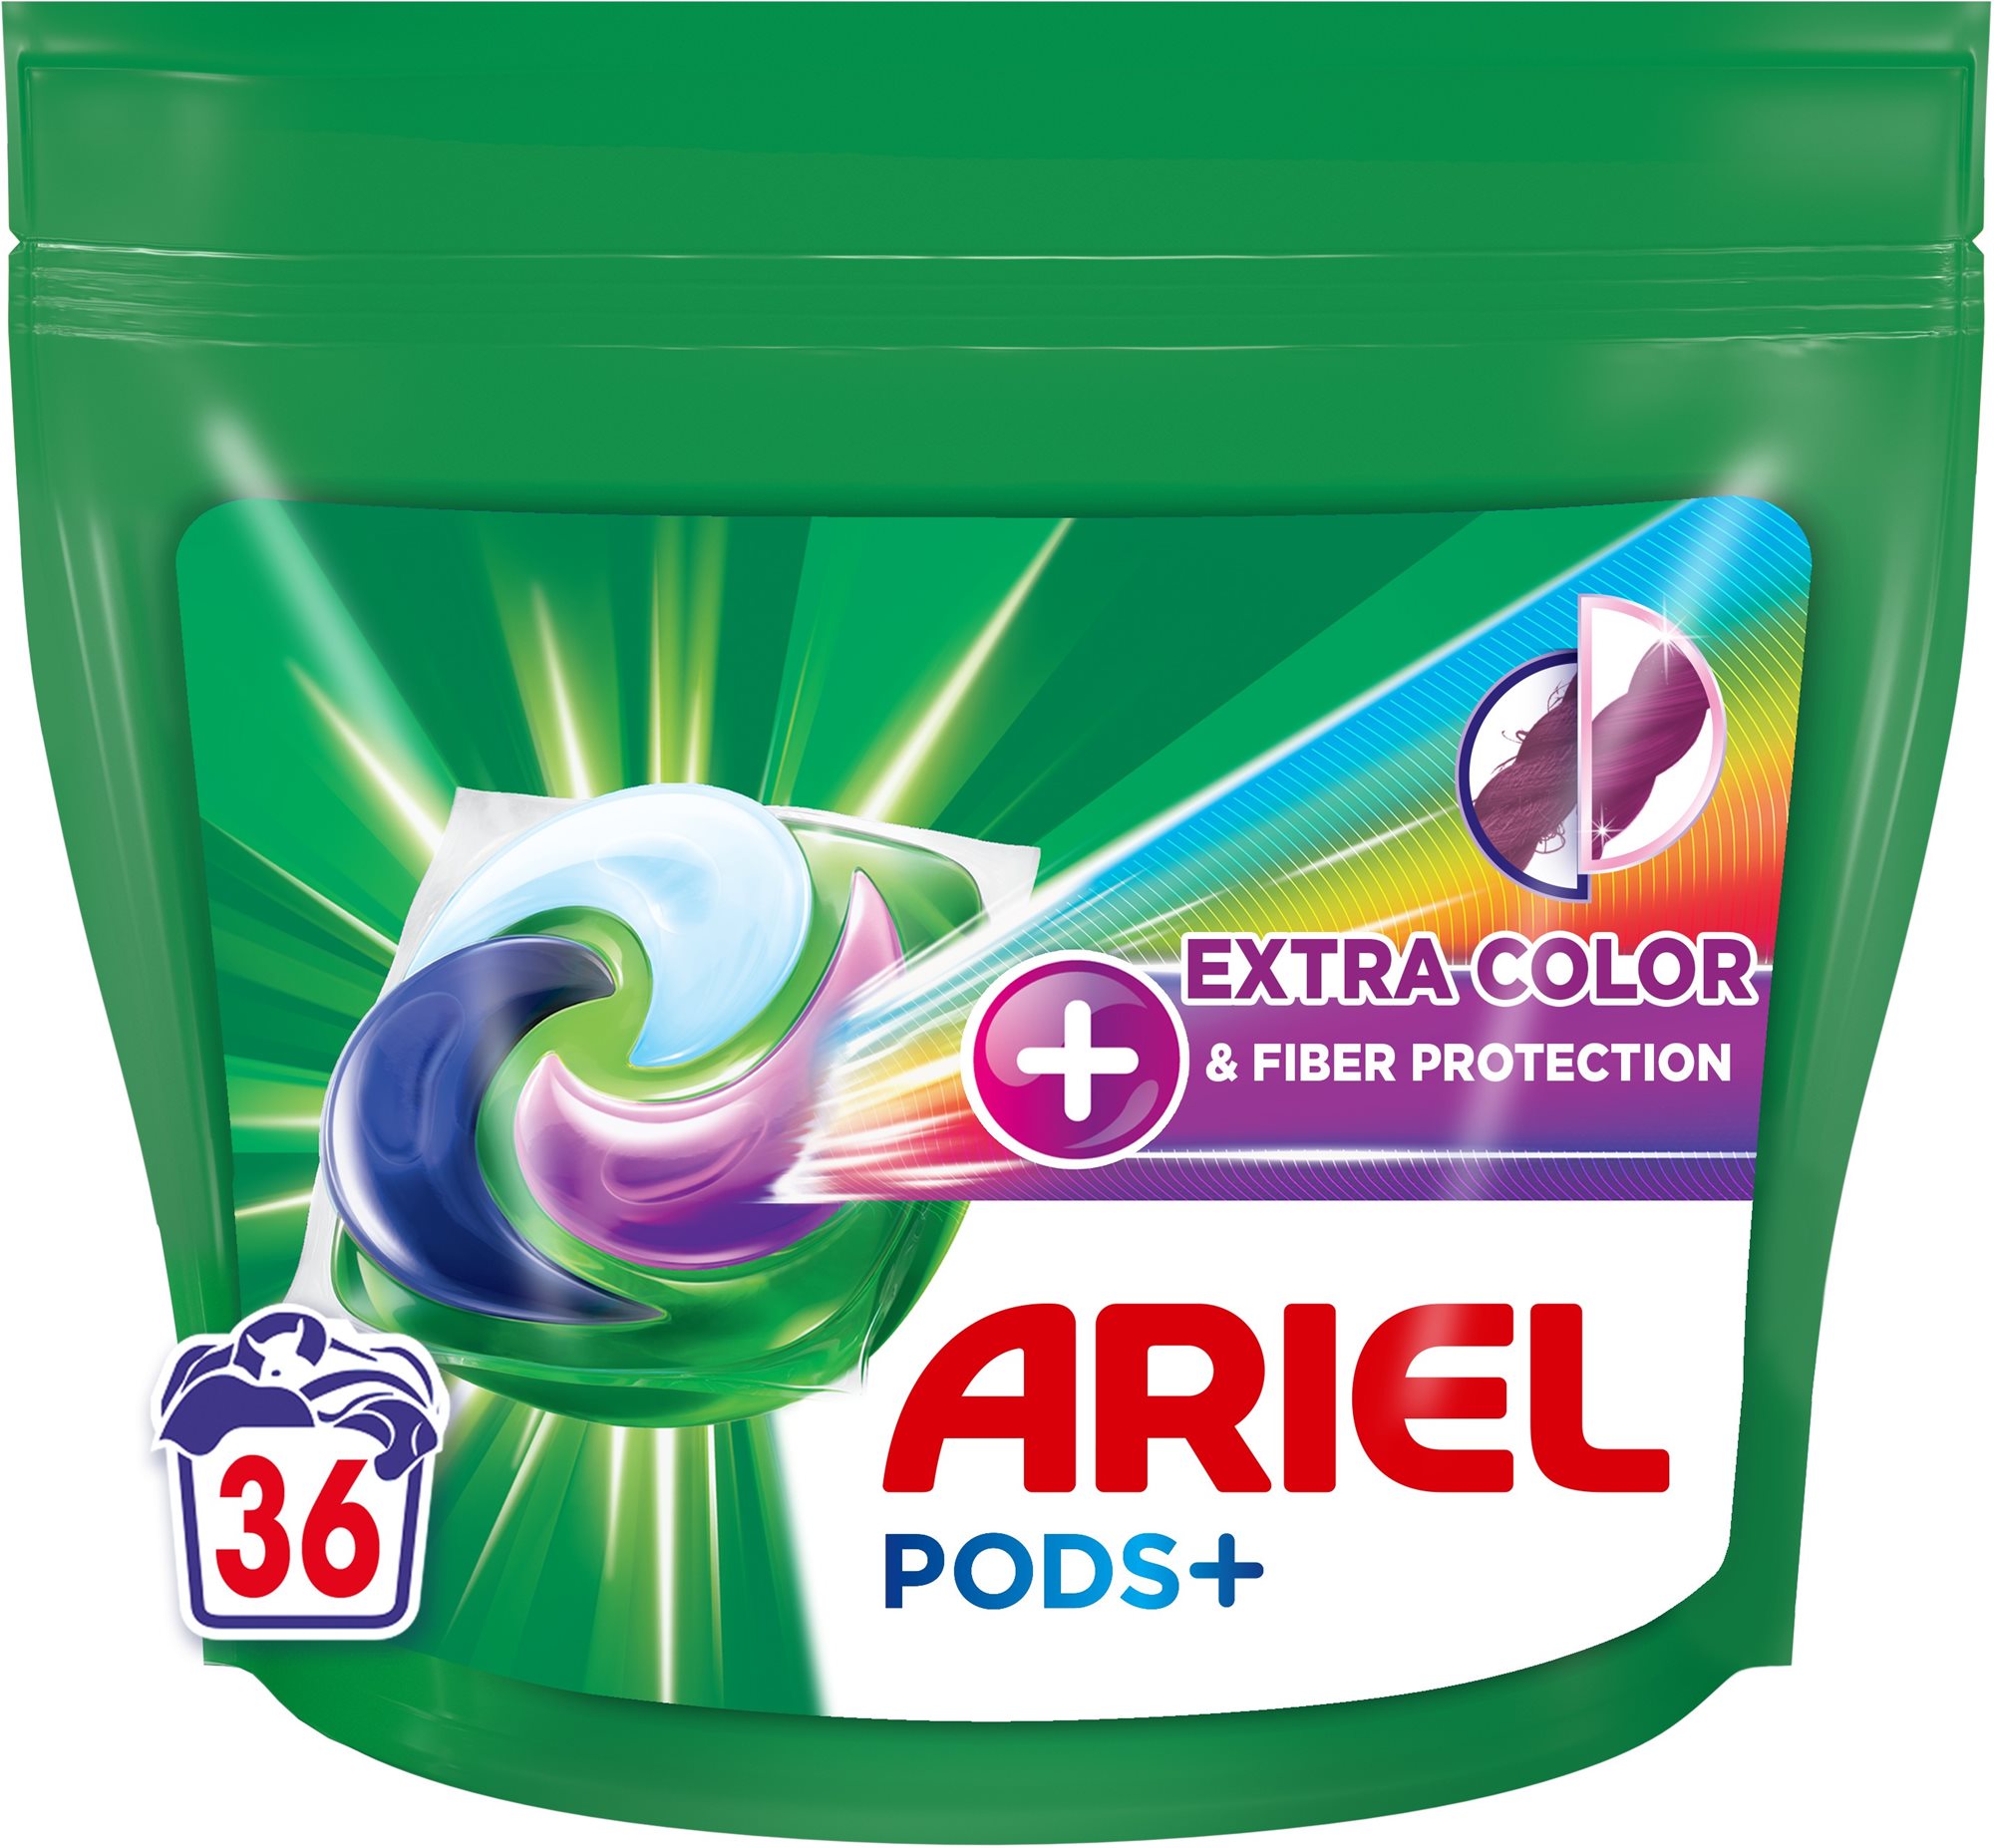 ARIEL+ Complete Care 36 db